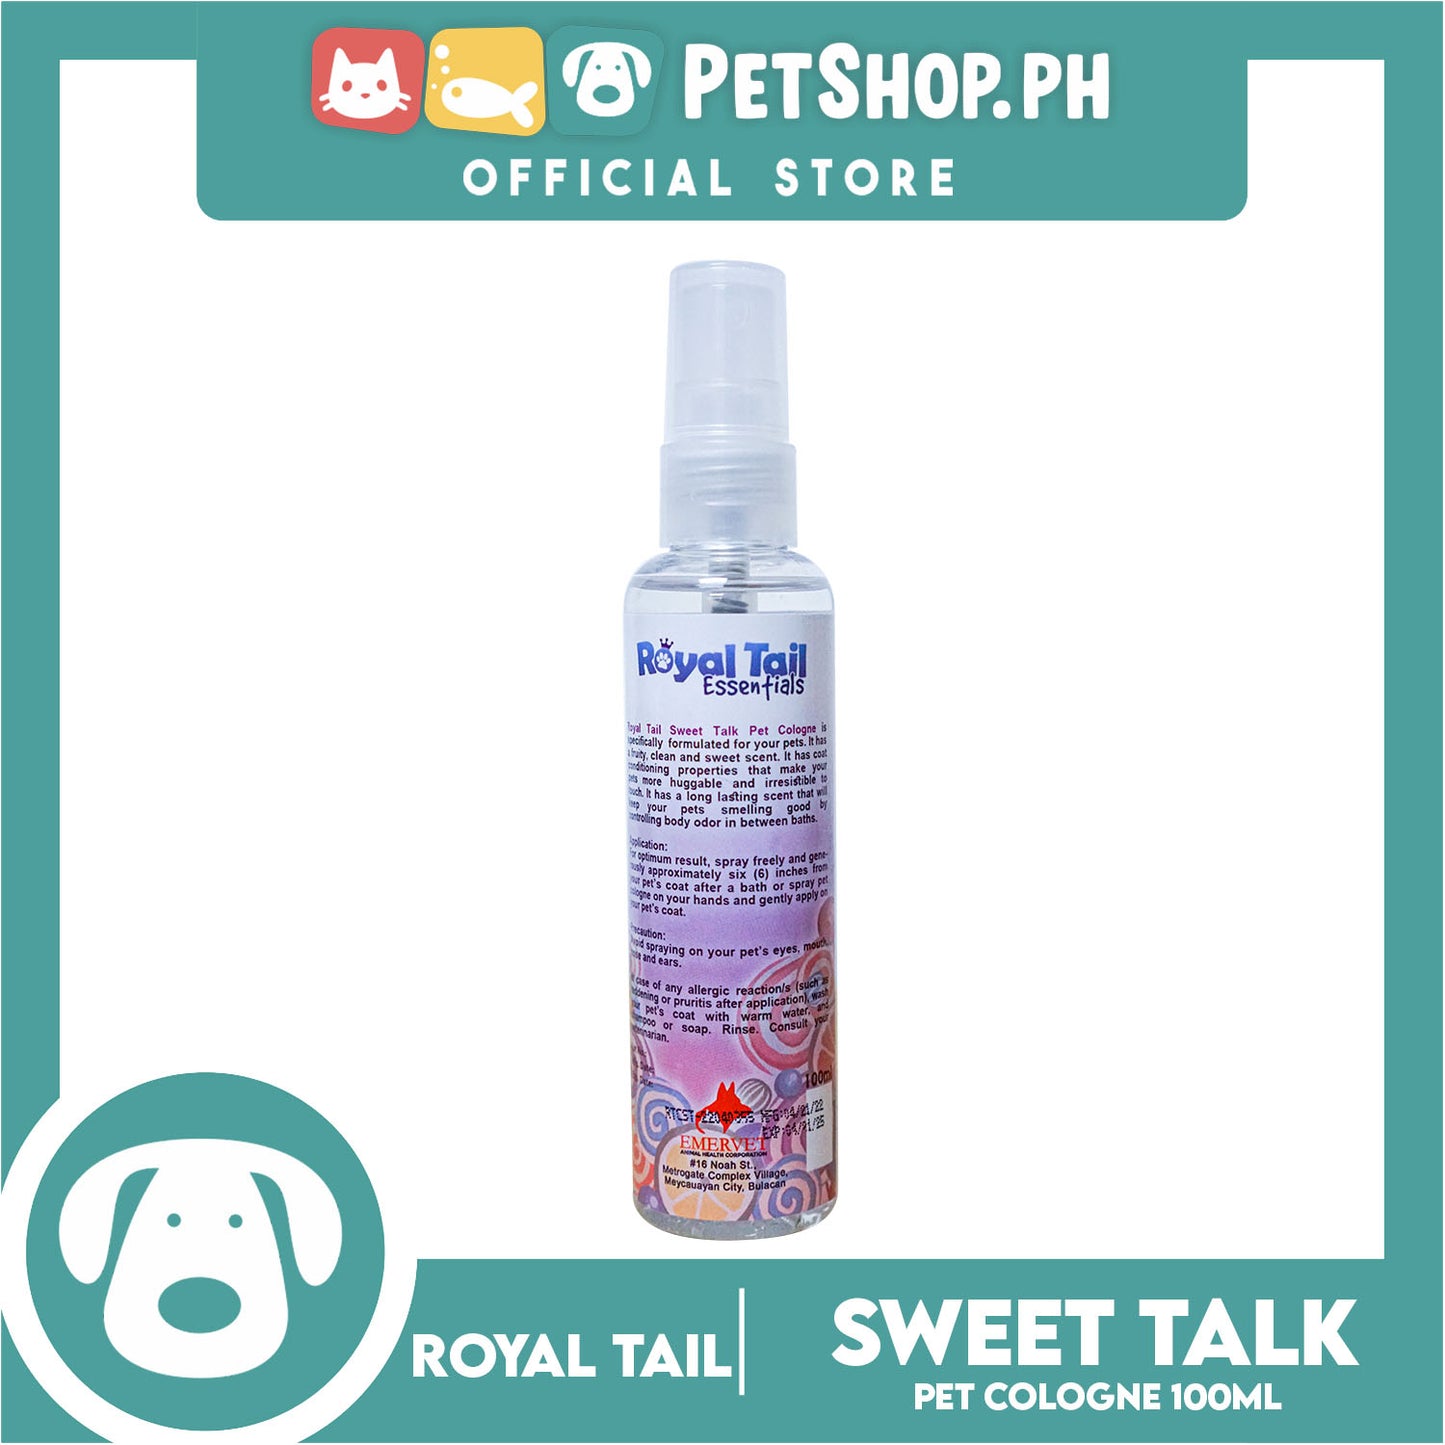 Royal Tail Essentials Pet Cologne (Sweet Talk) 100ml